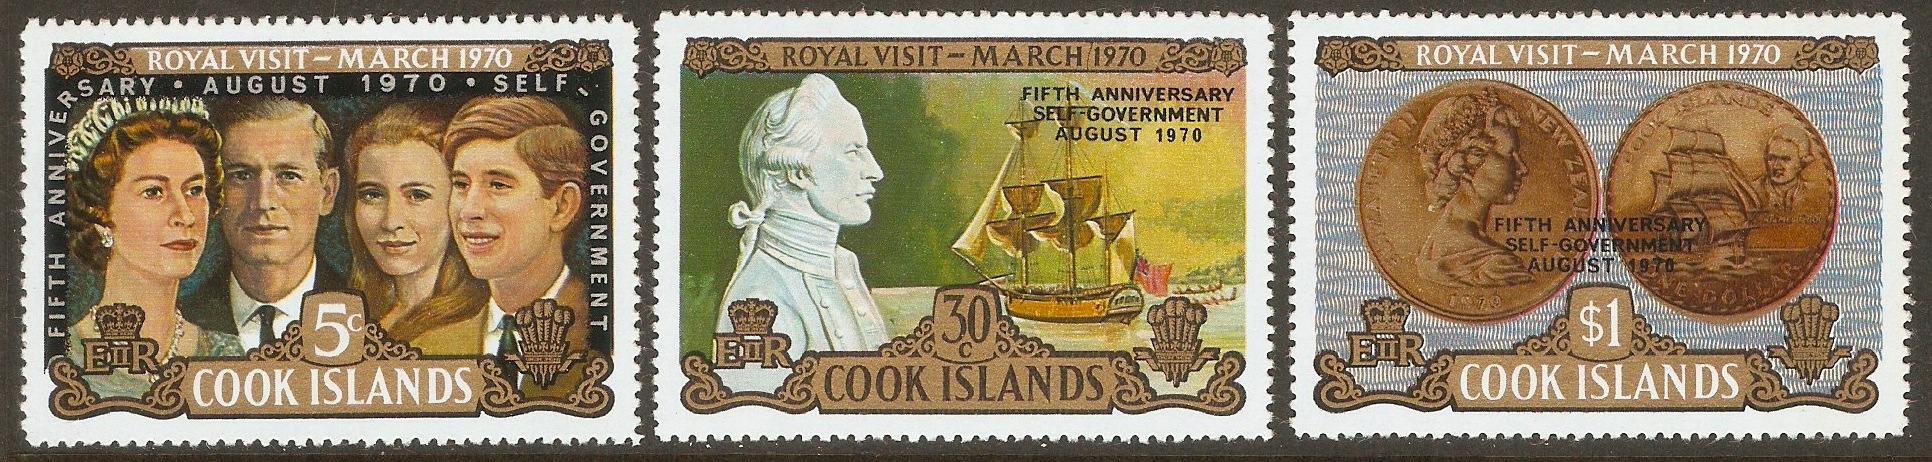 Cook Islands 1970 Self-Government Anniversary set. SG332-SG334.